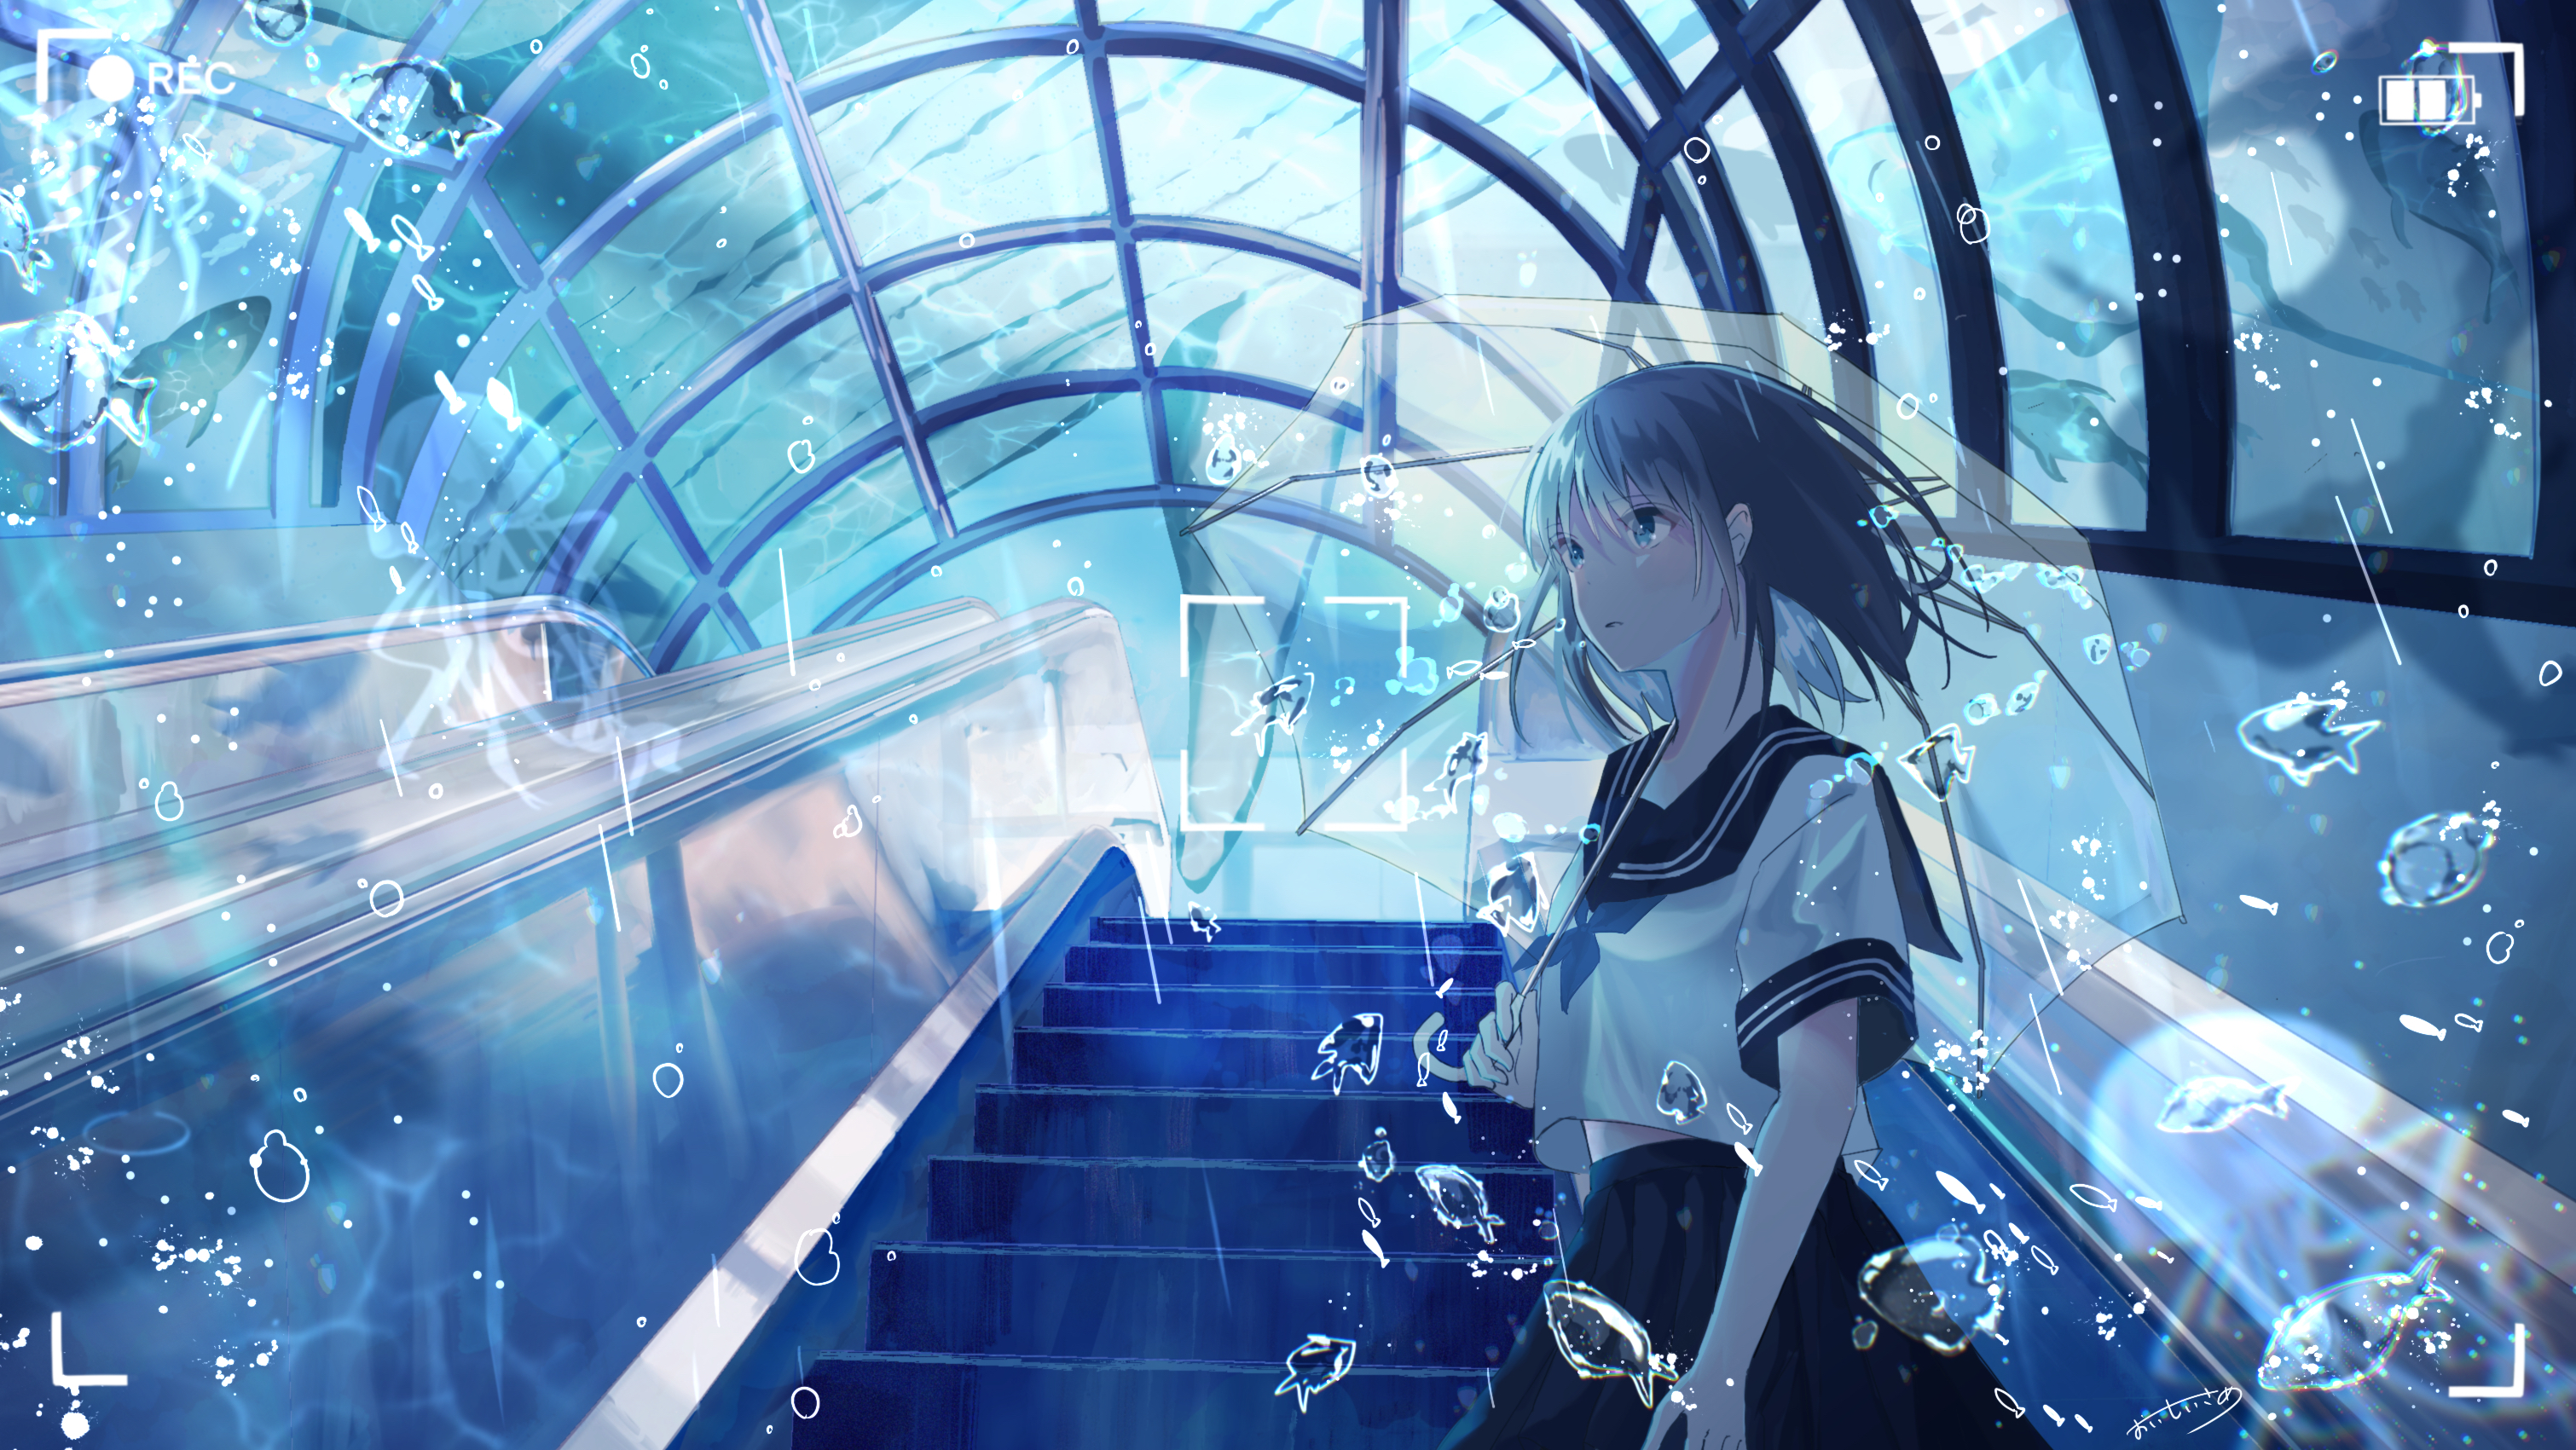 Anime Anime Girls Stairs Escalator Umbrella Fish Water Drops Looking Away Schoolgirl School Uniform  3021x1701